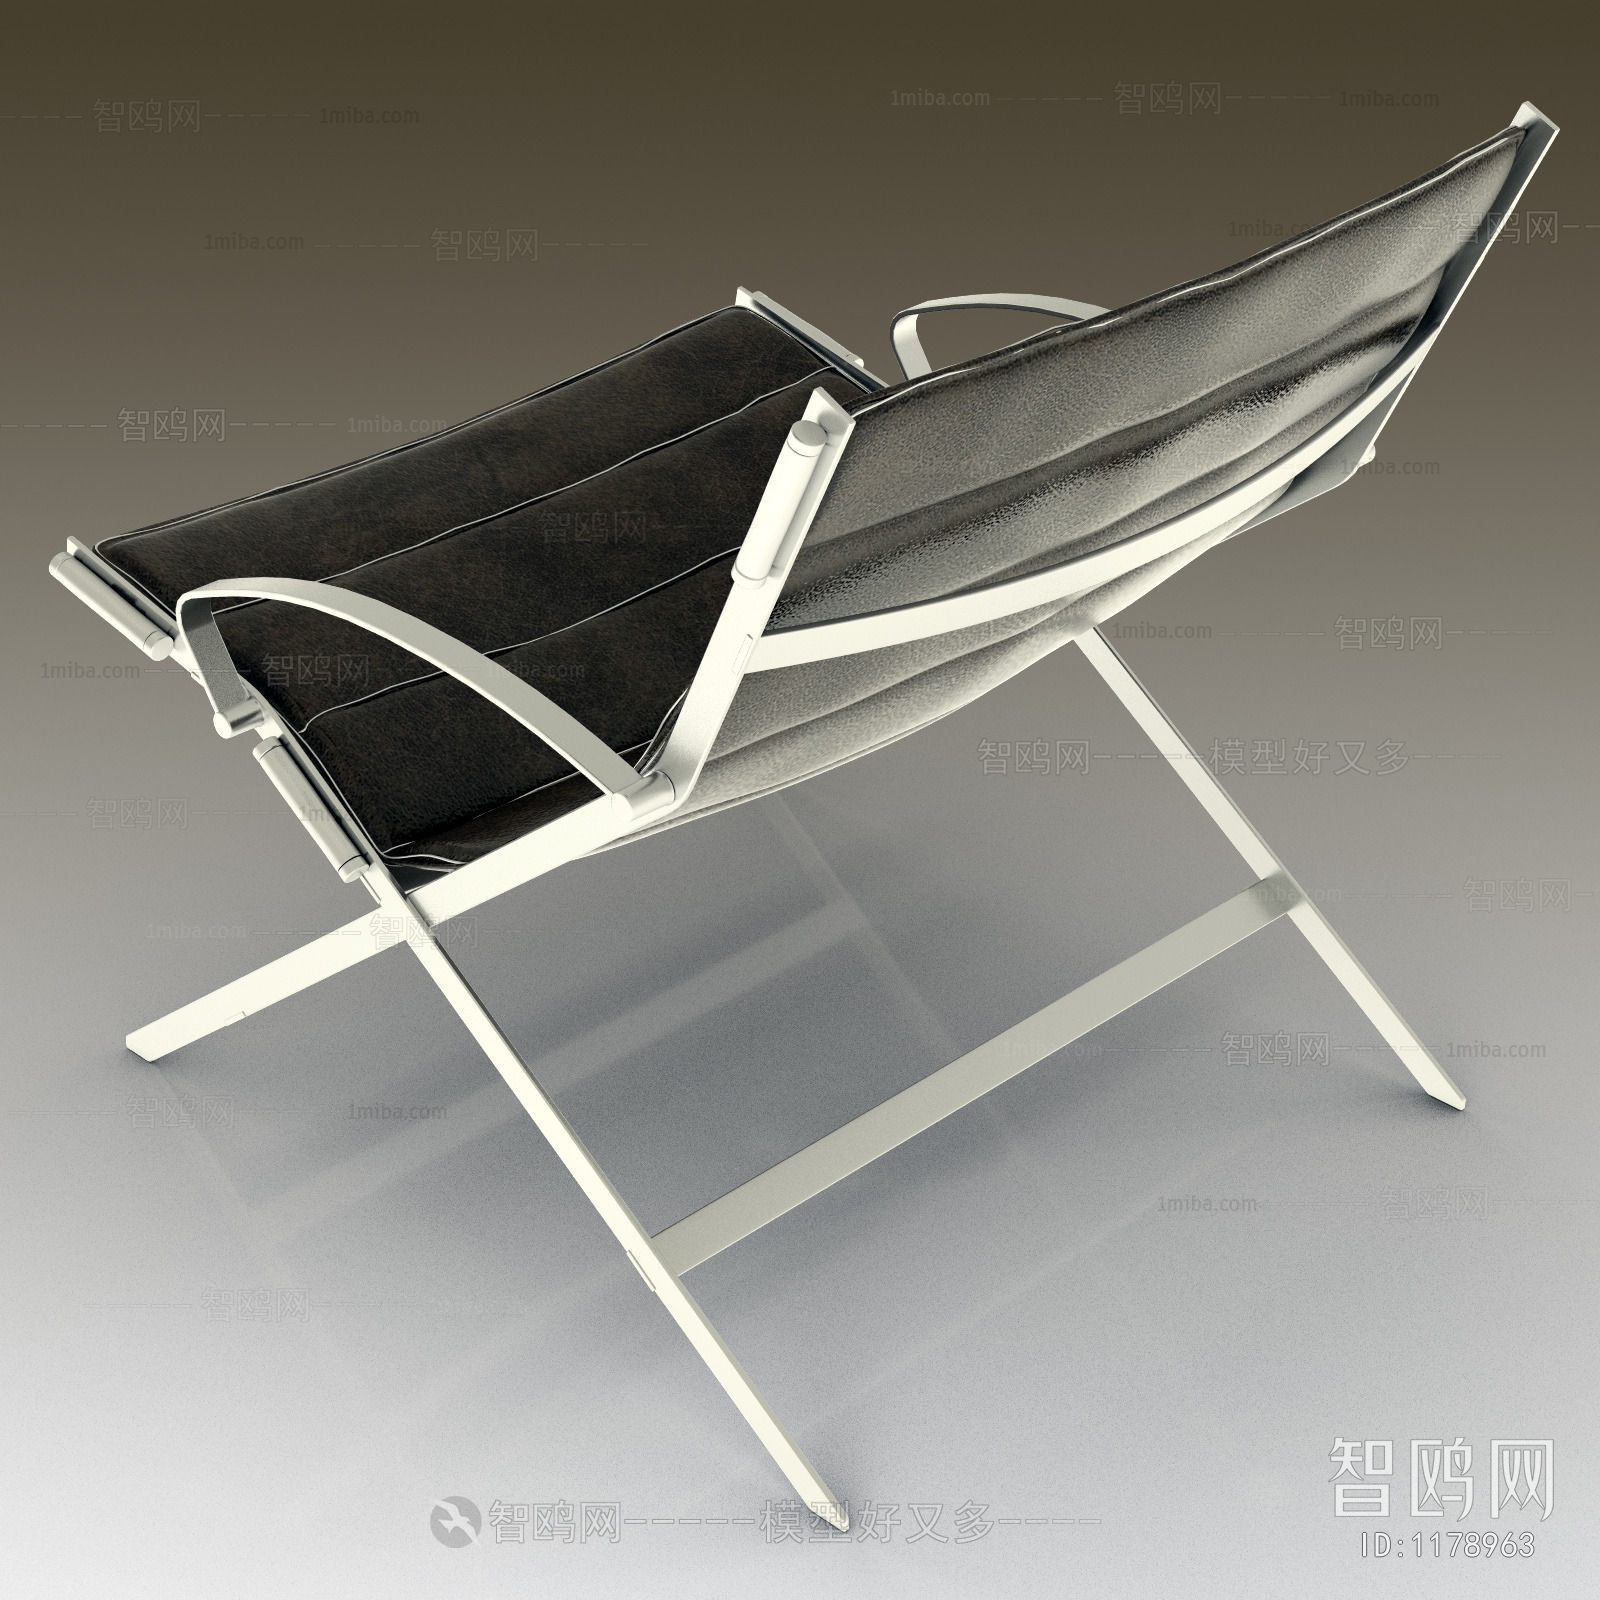 Modern Lounge Chair